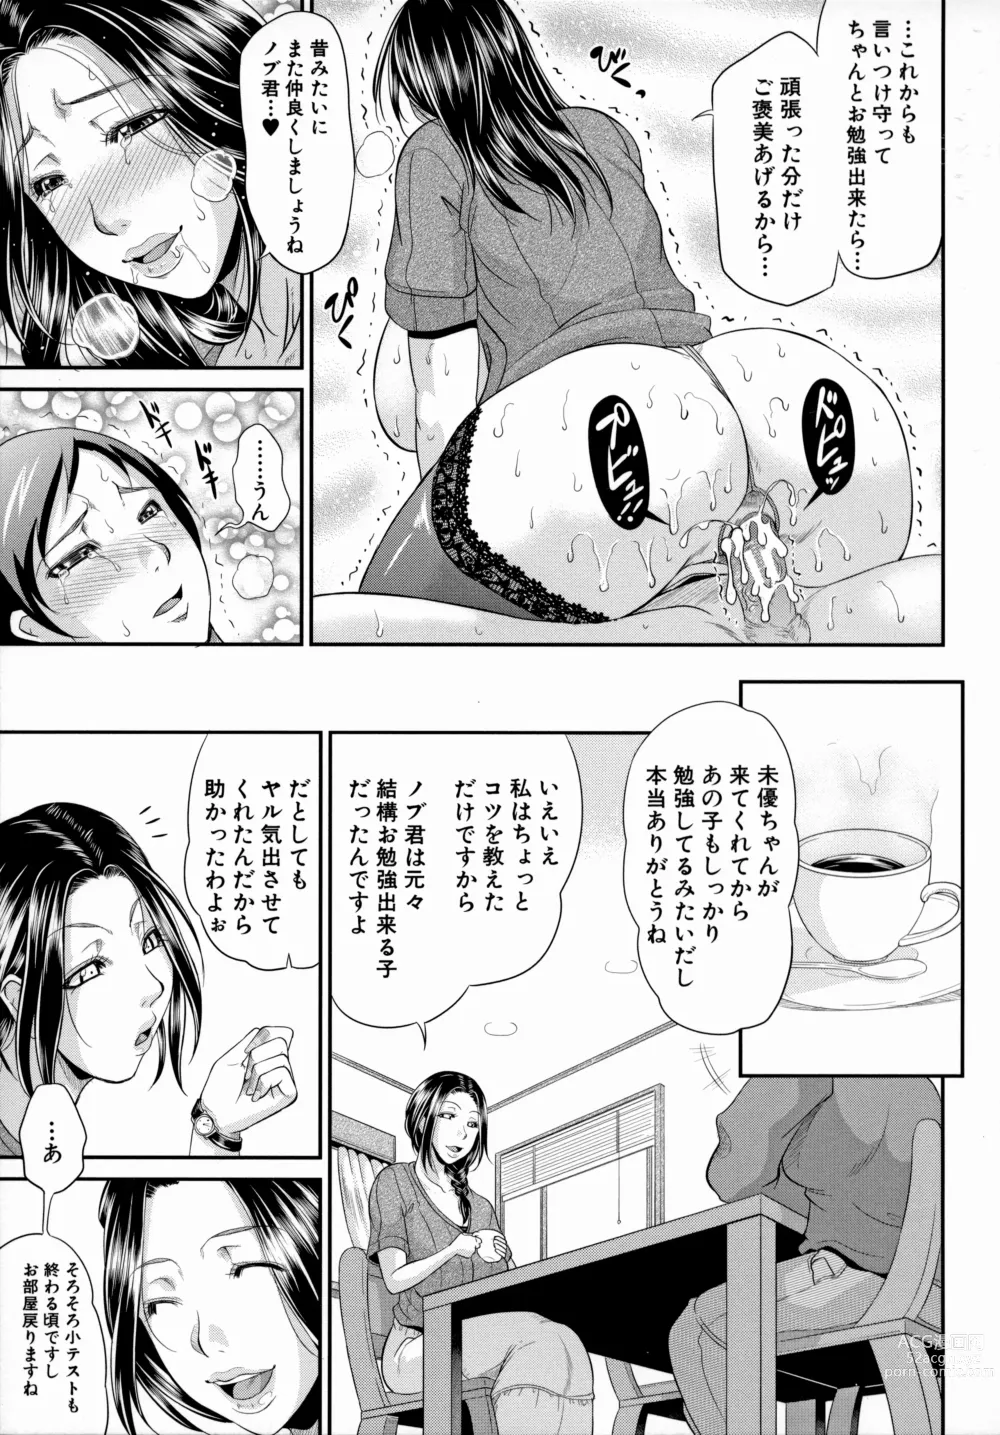 Page 195 of manga Uruwashi no Wife